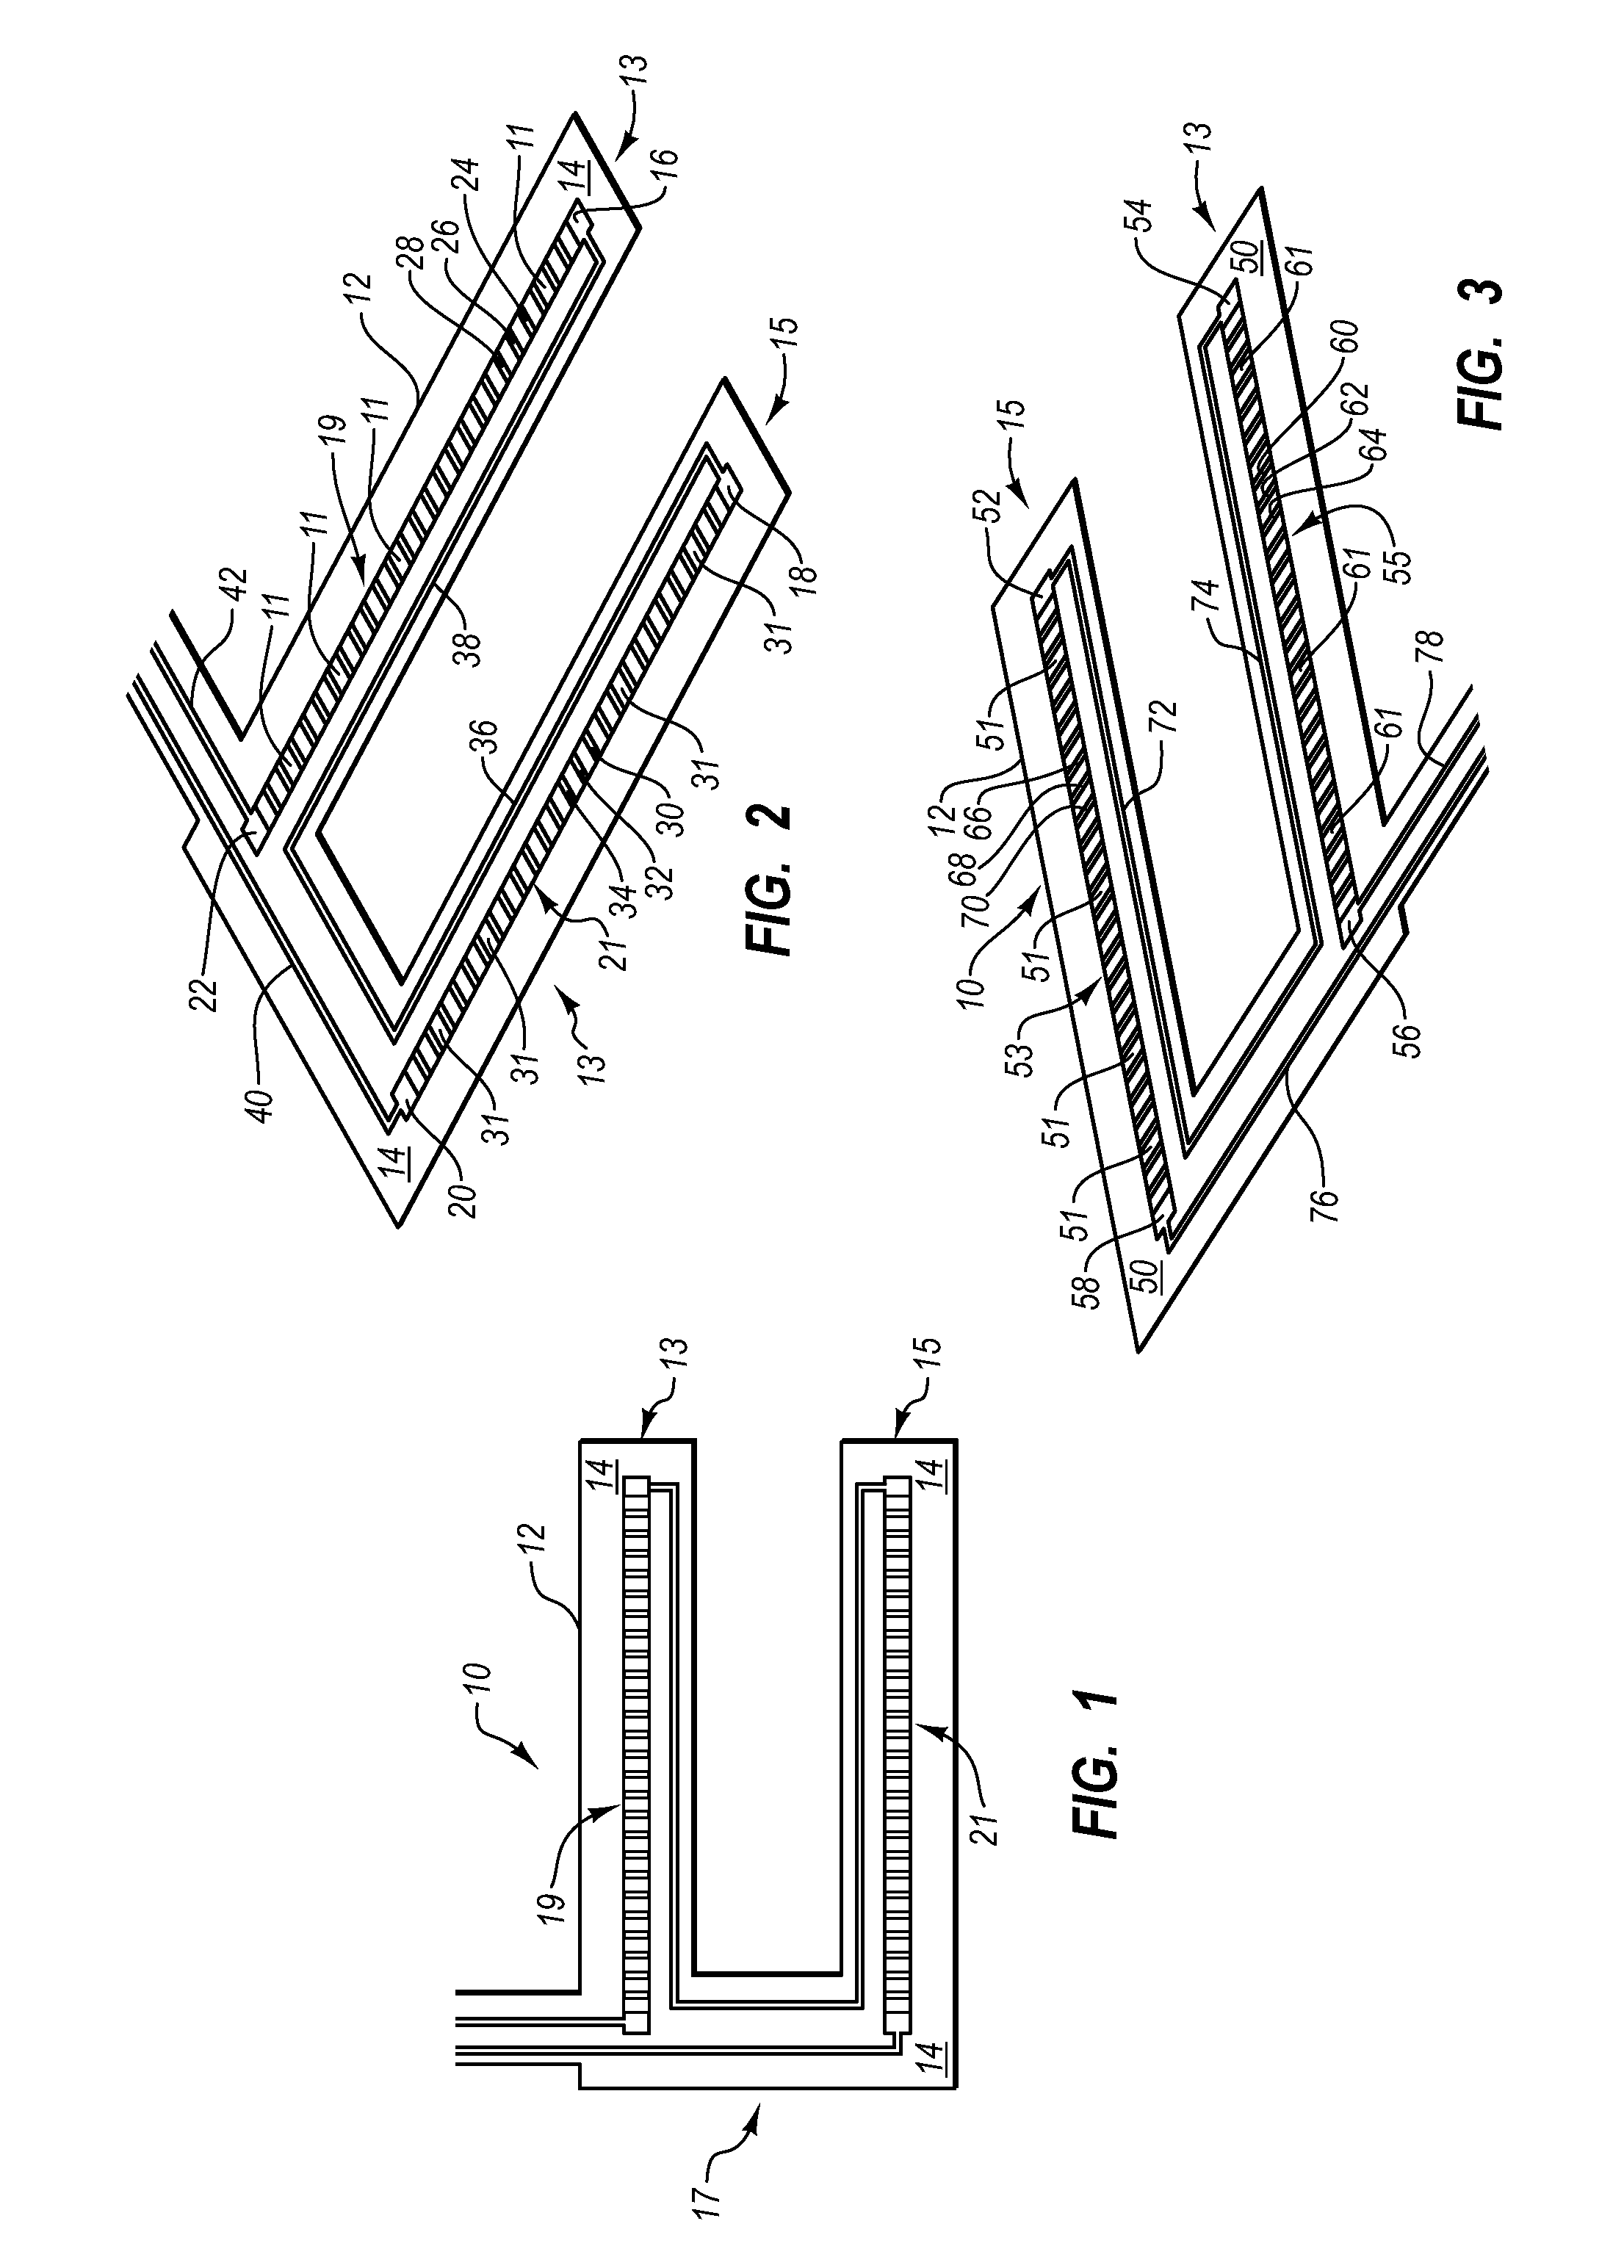 Bi-directional deflectable resistor